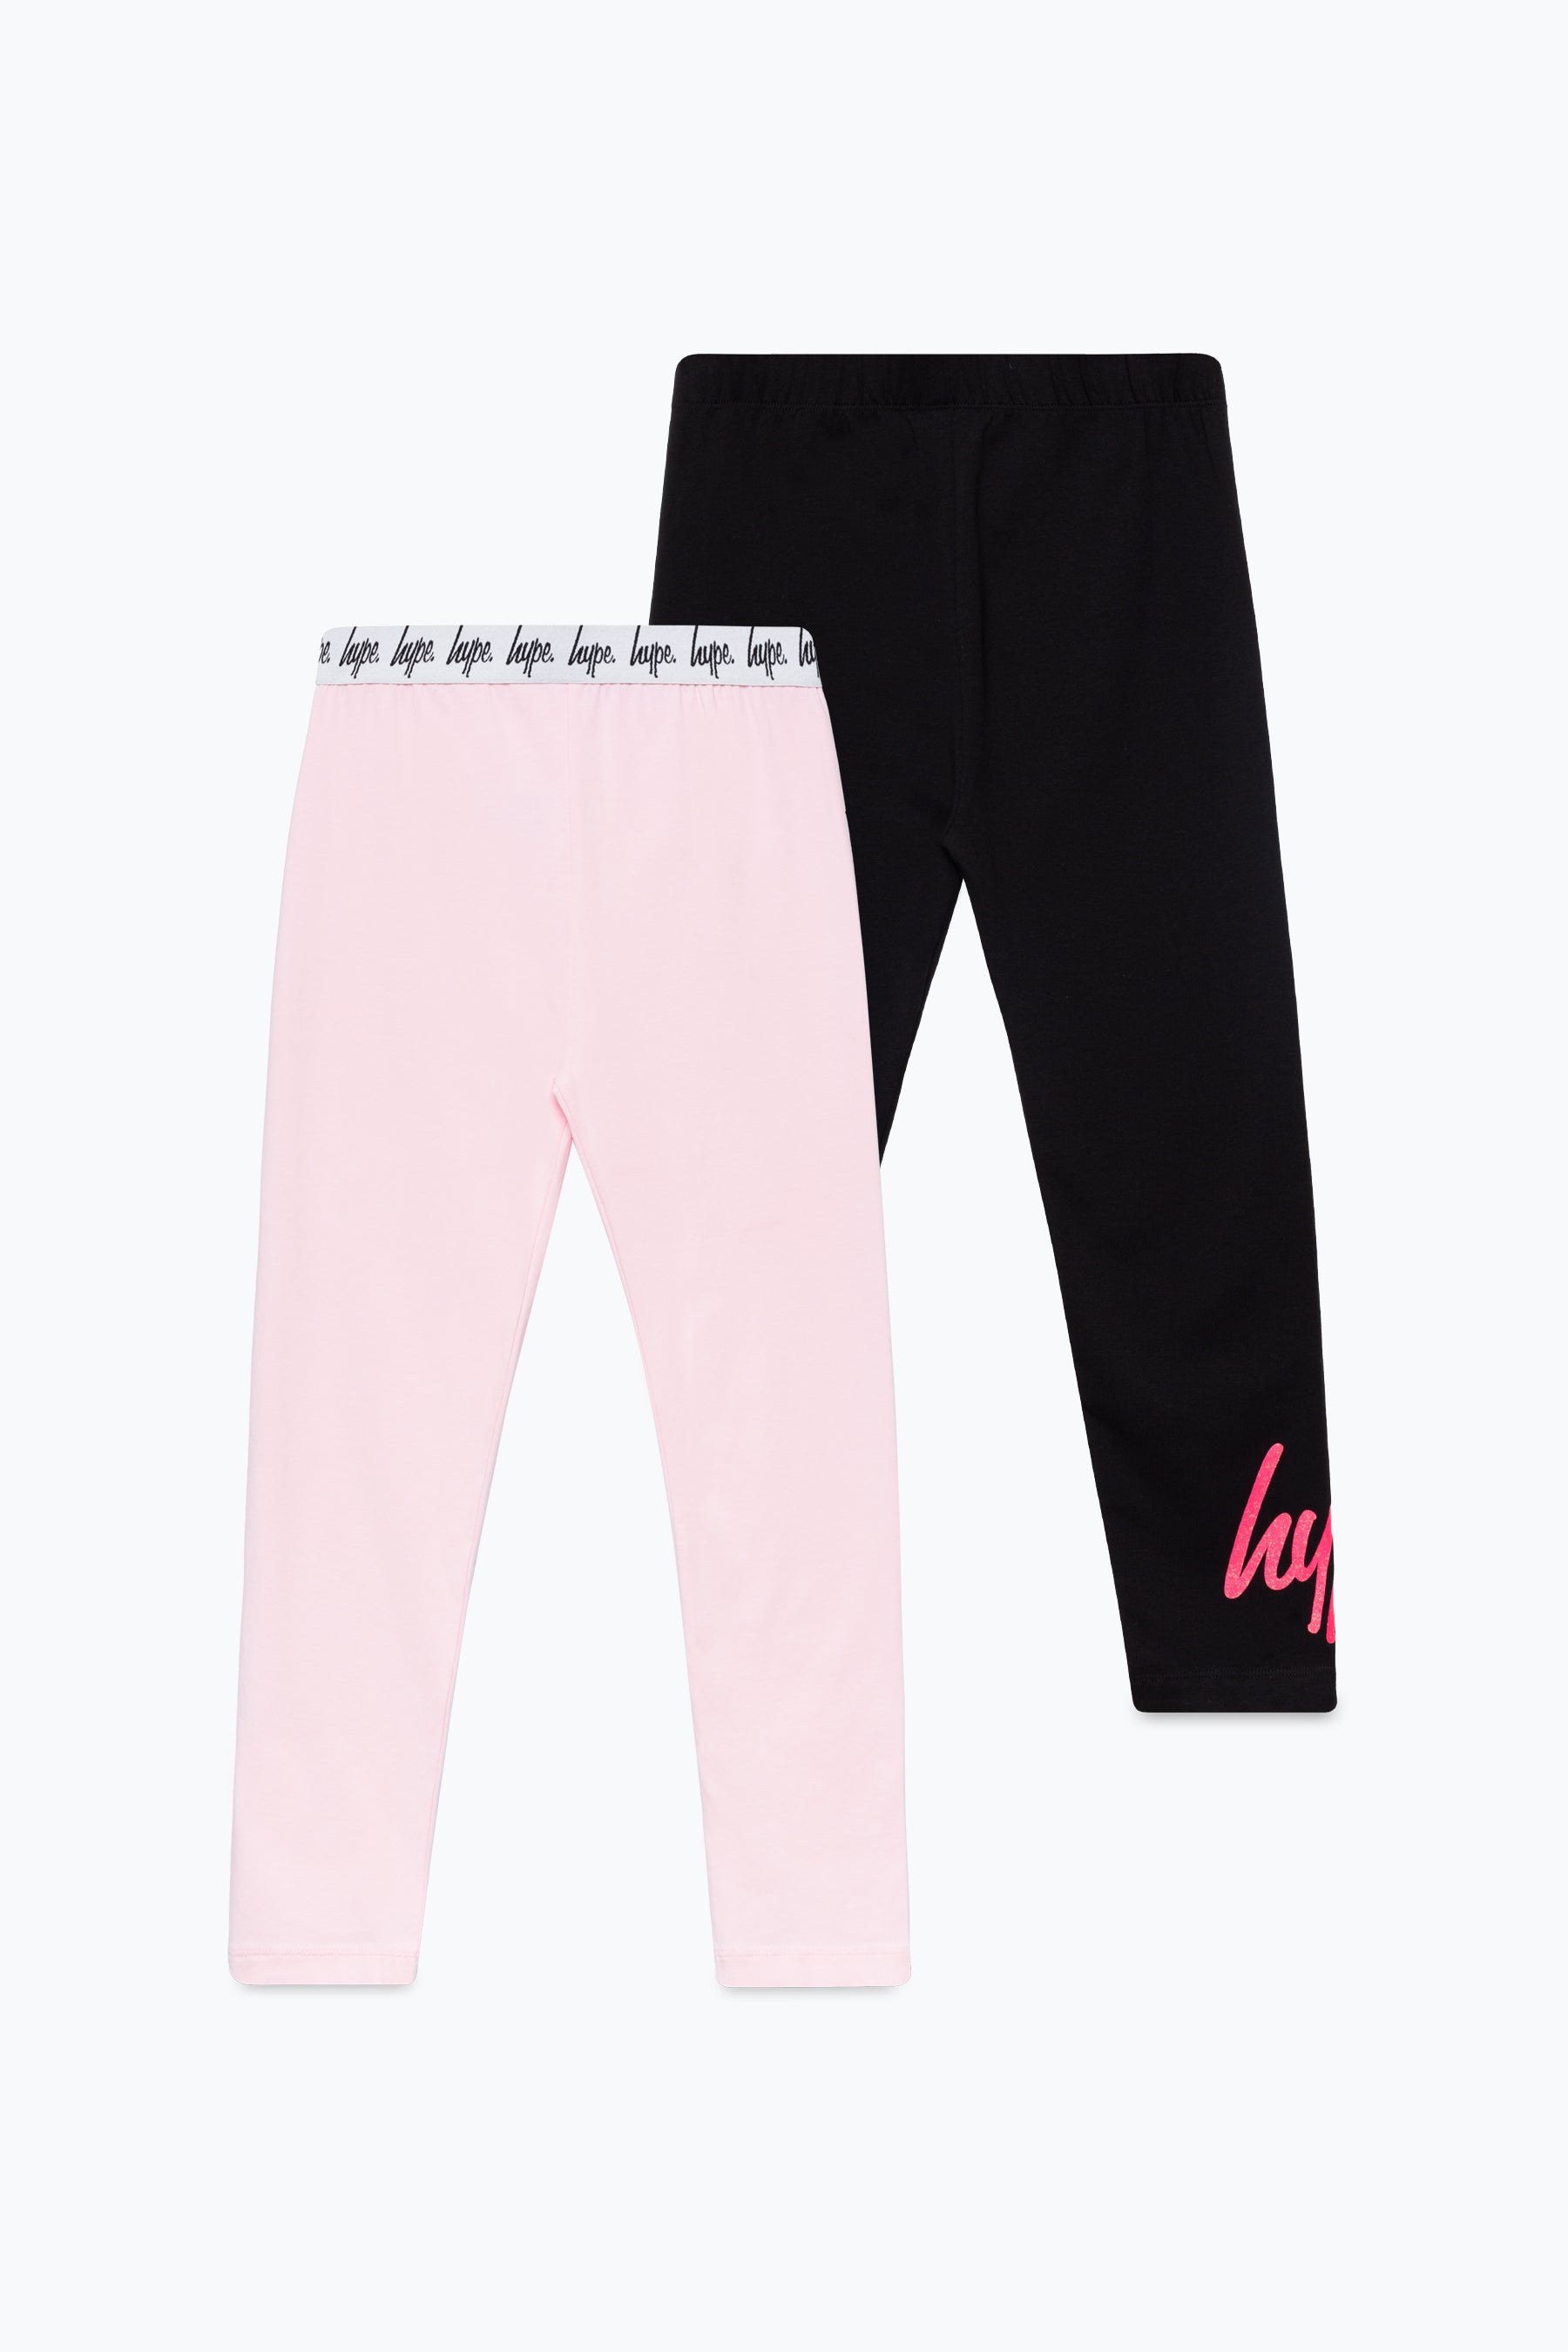 hype girls black pink script 2 pack leggings